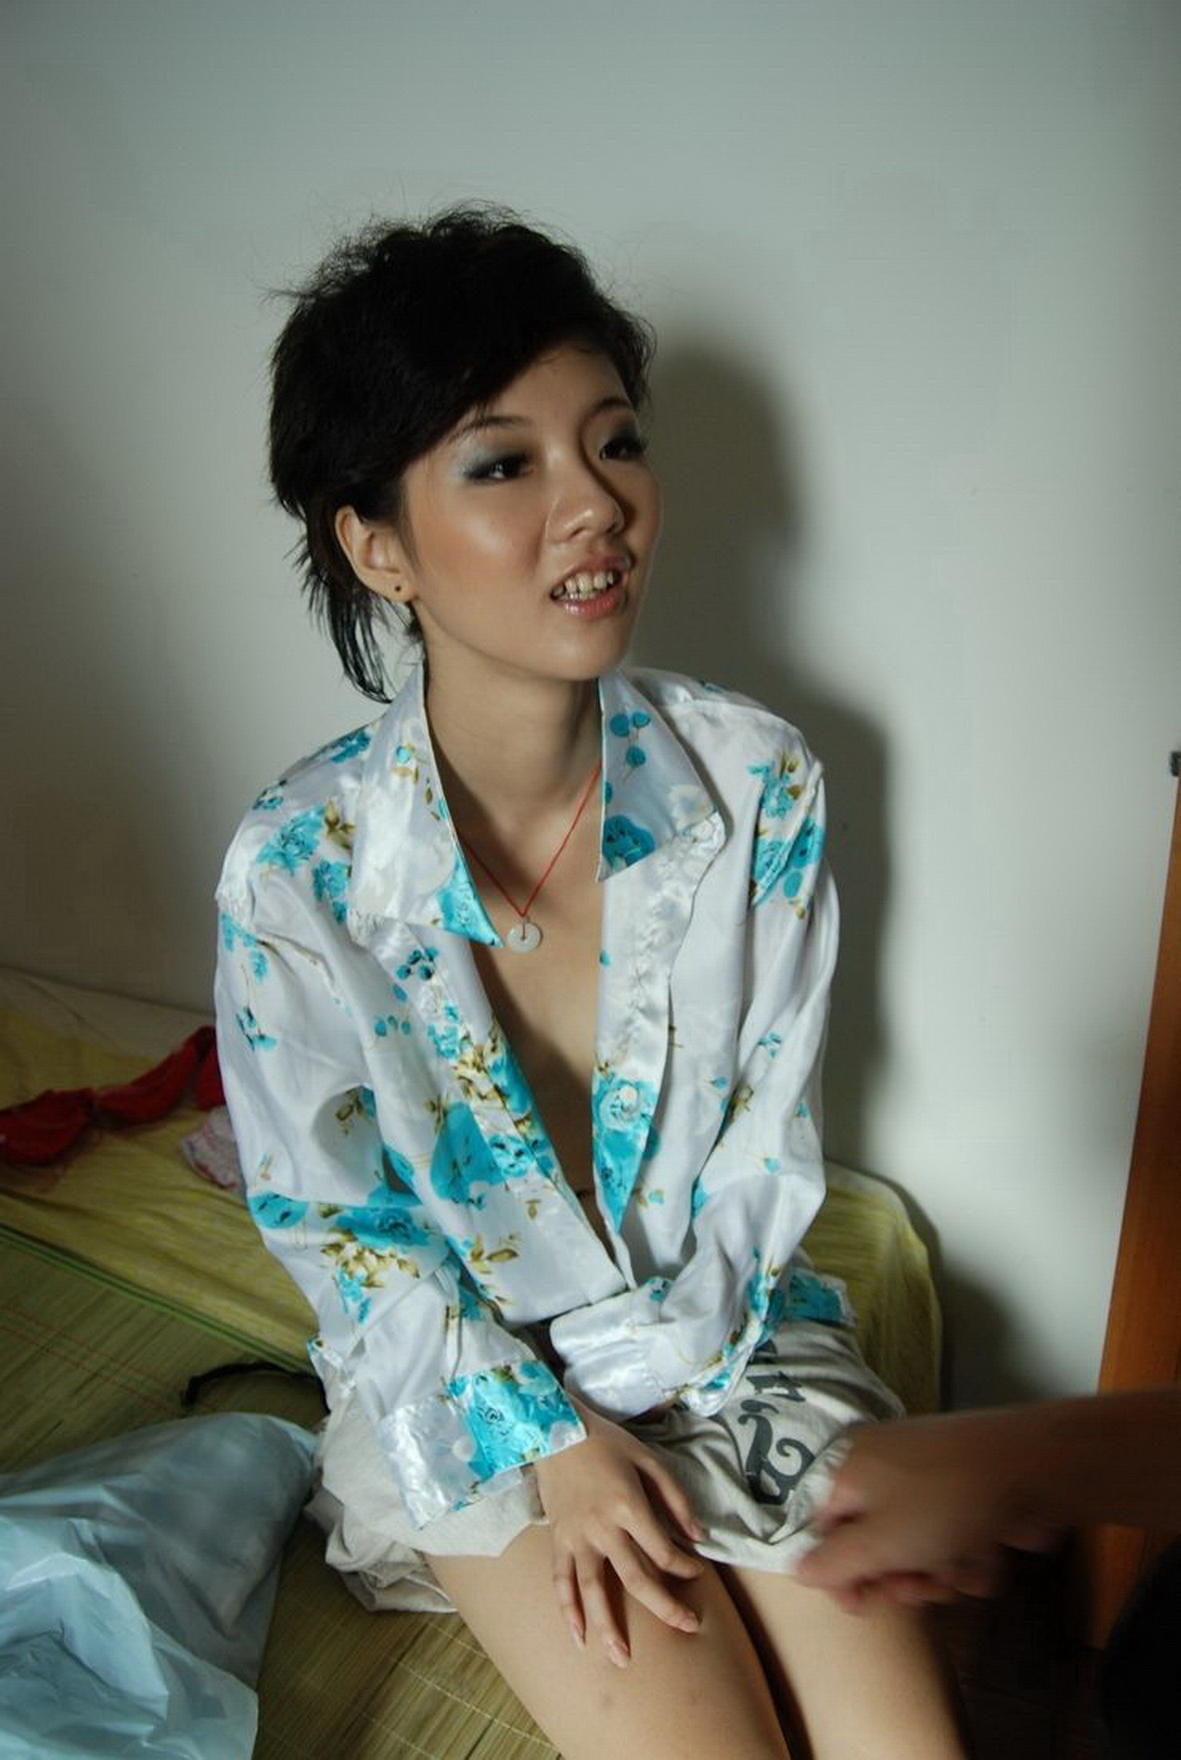 Sex archive Housewife asian panties cuckold